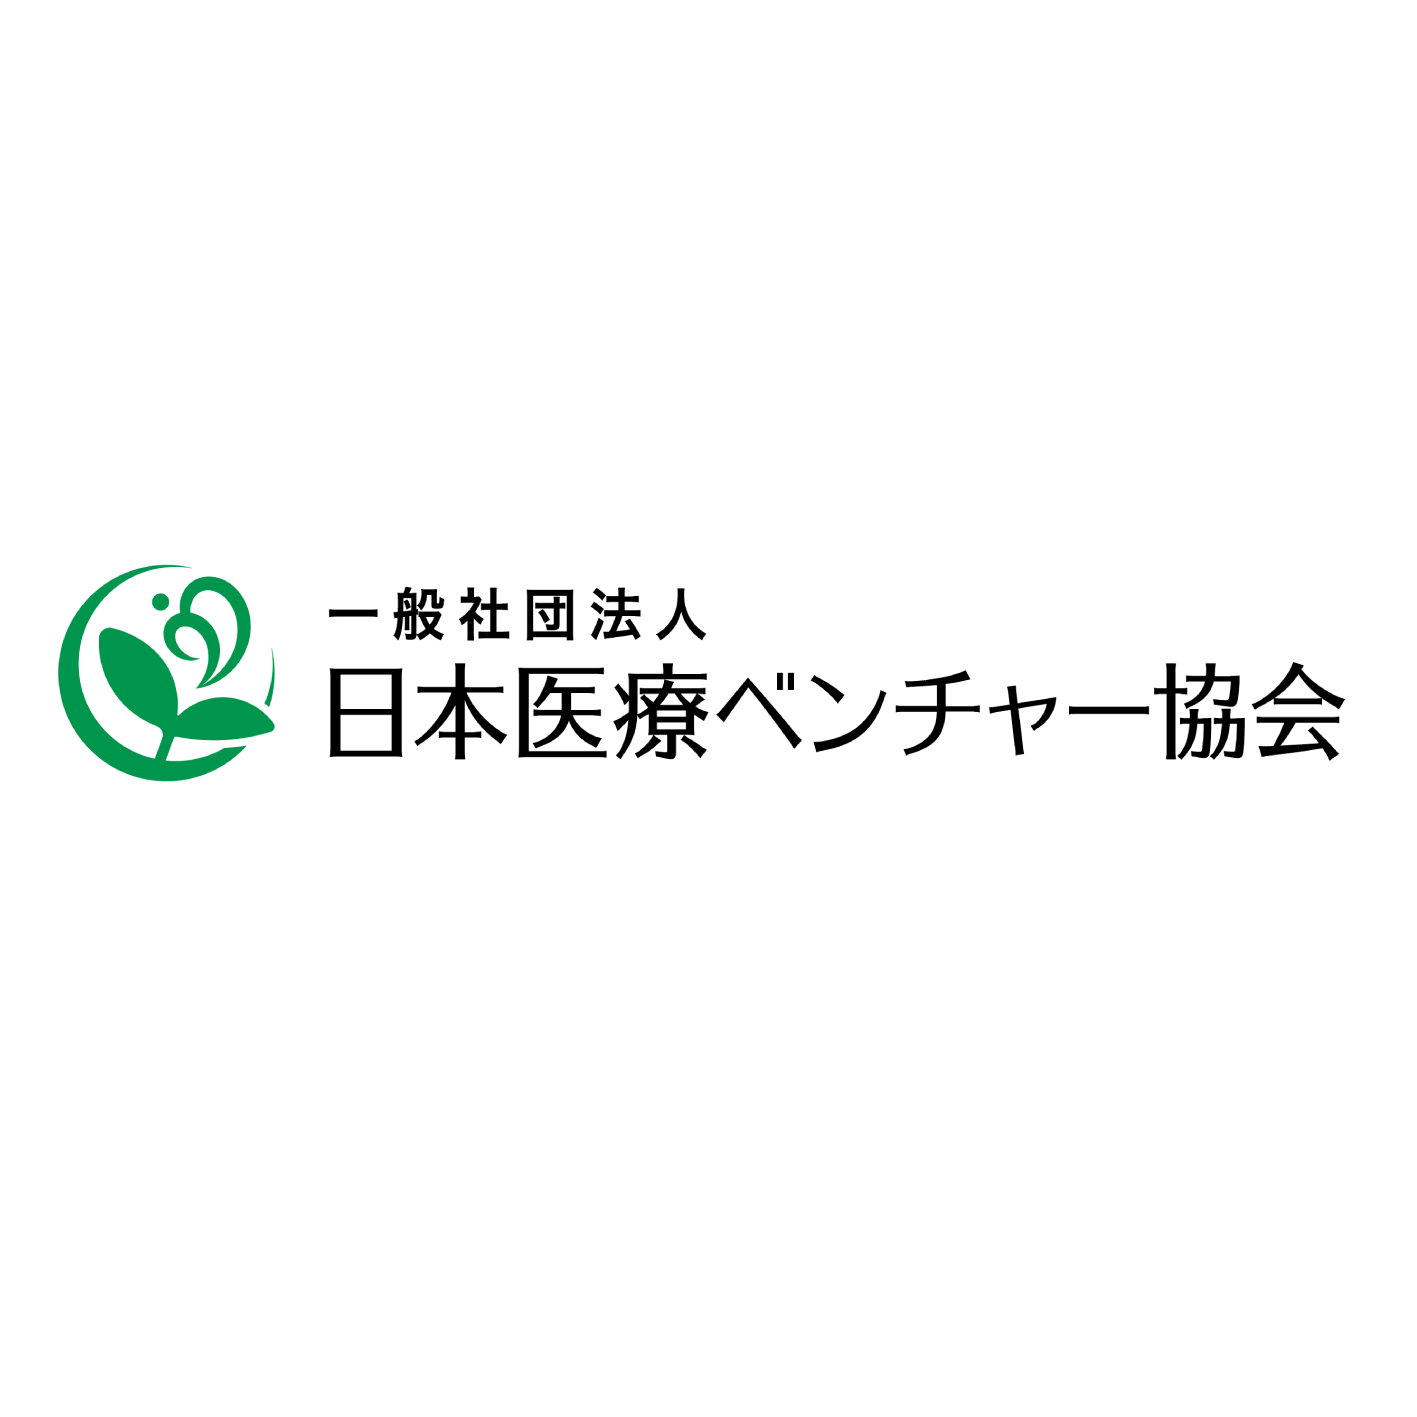 一般社団法人日本医療ベンチャー協会